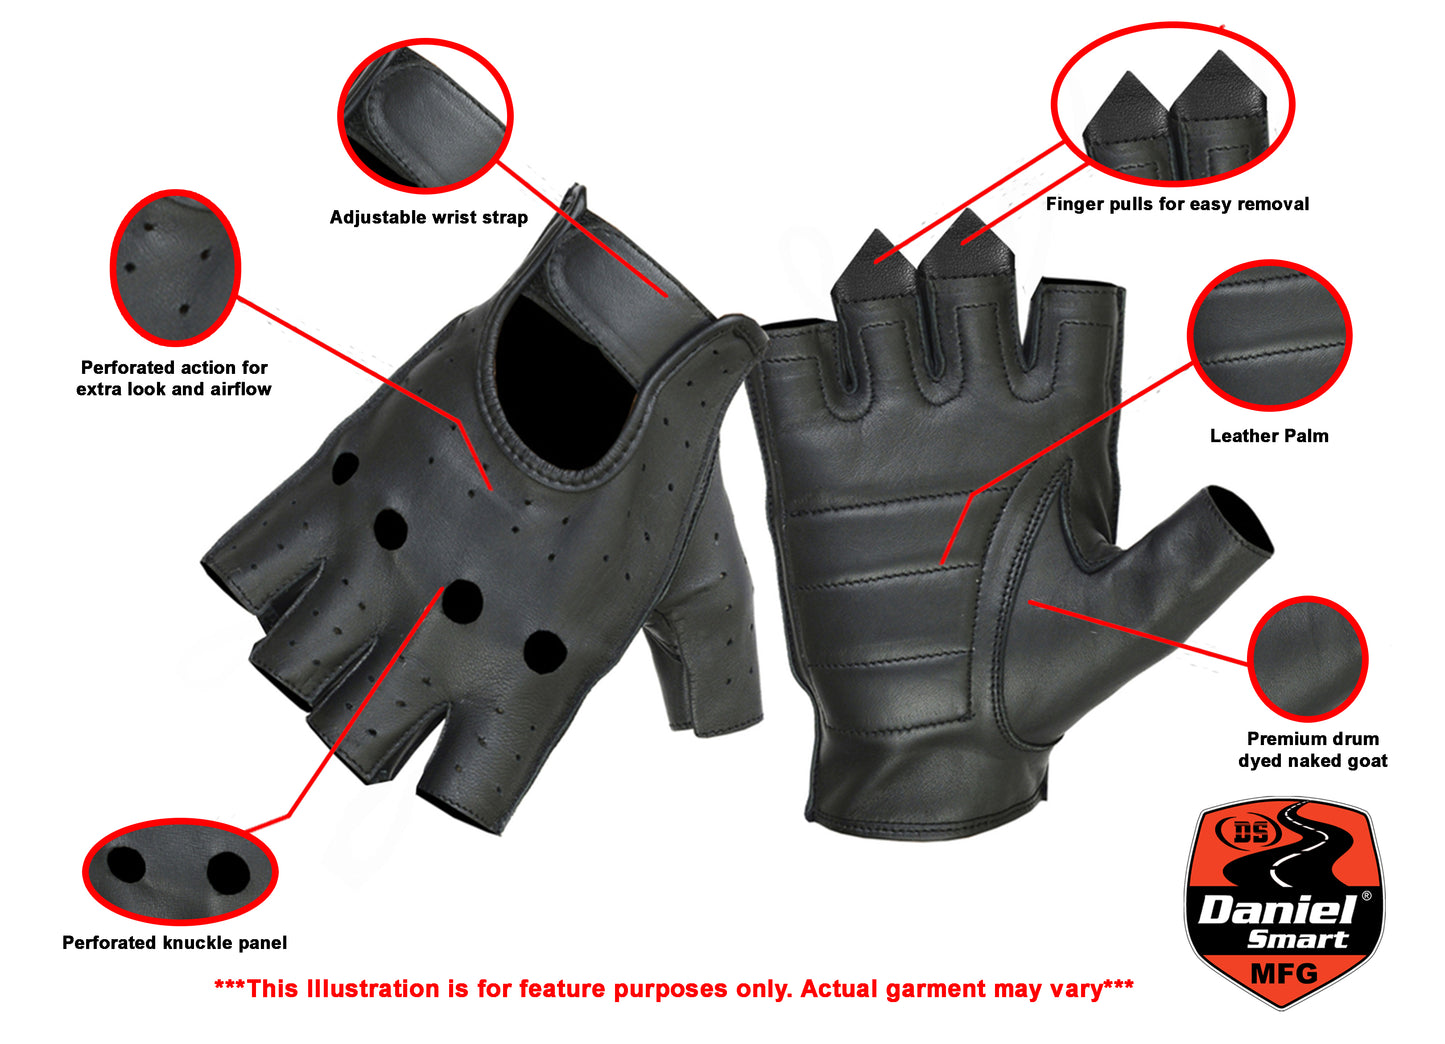 Premium Fingerless Glove